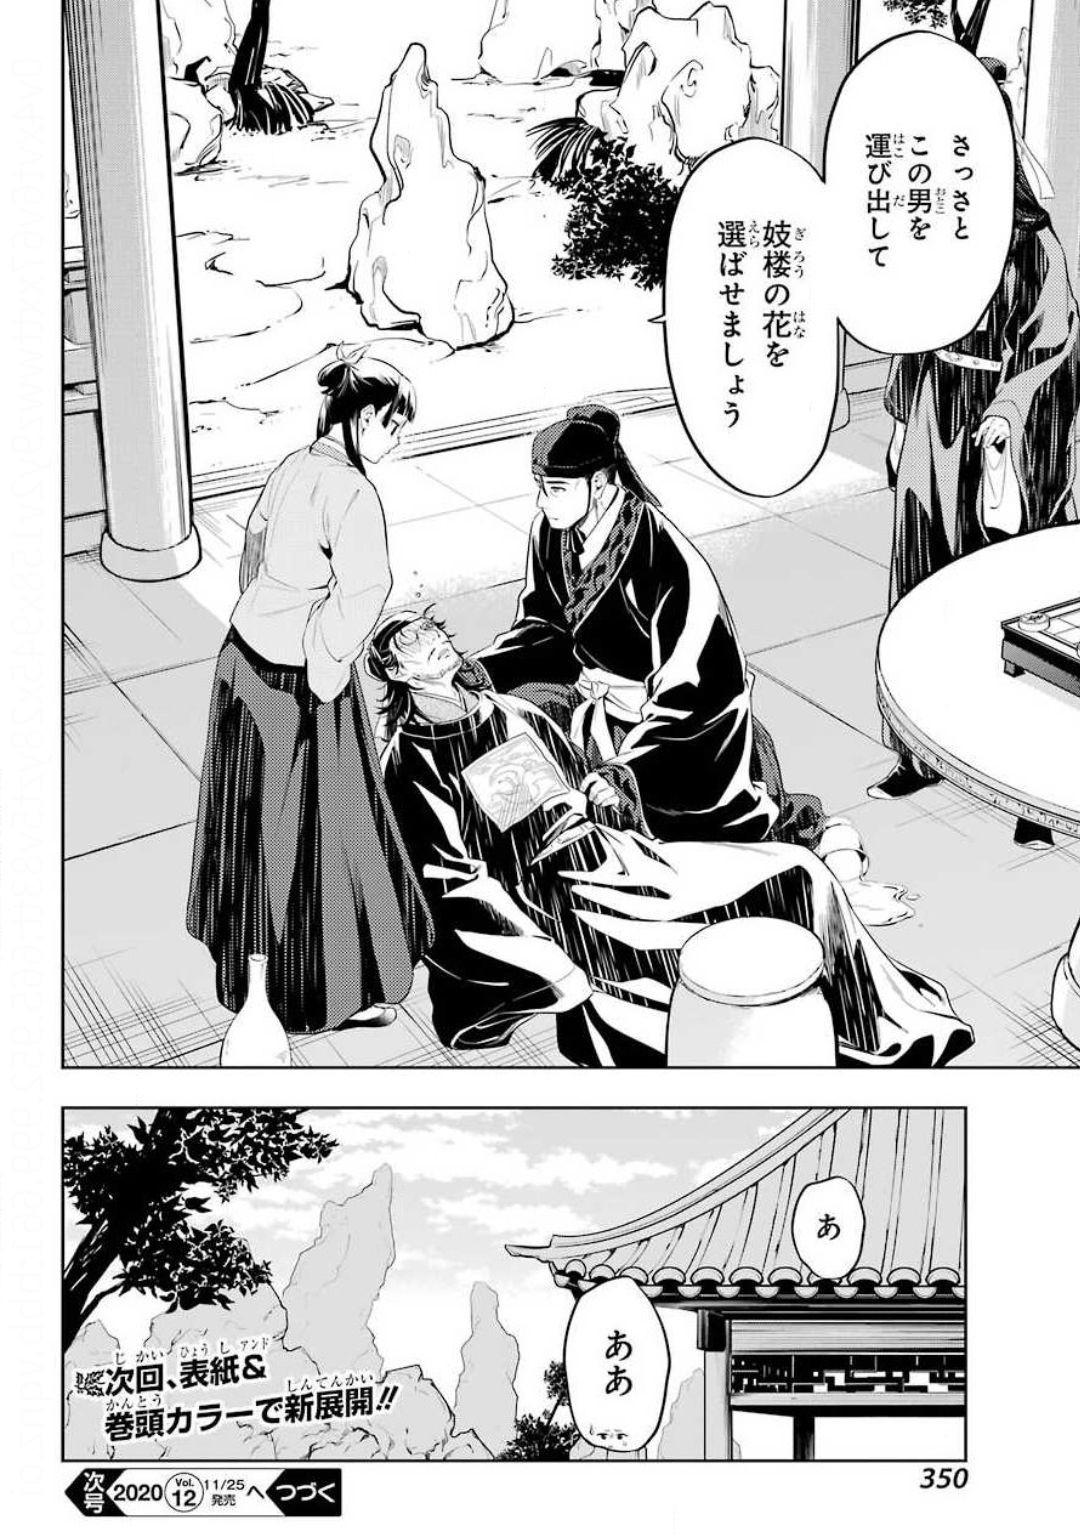 Kusuriya no Hitorigoto - Chapter 36-3 - Page 23